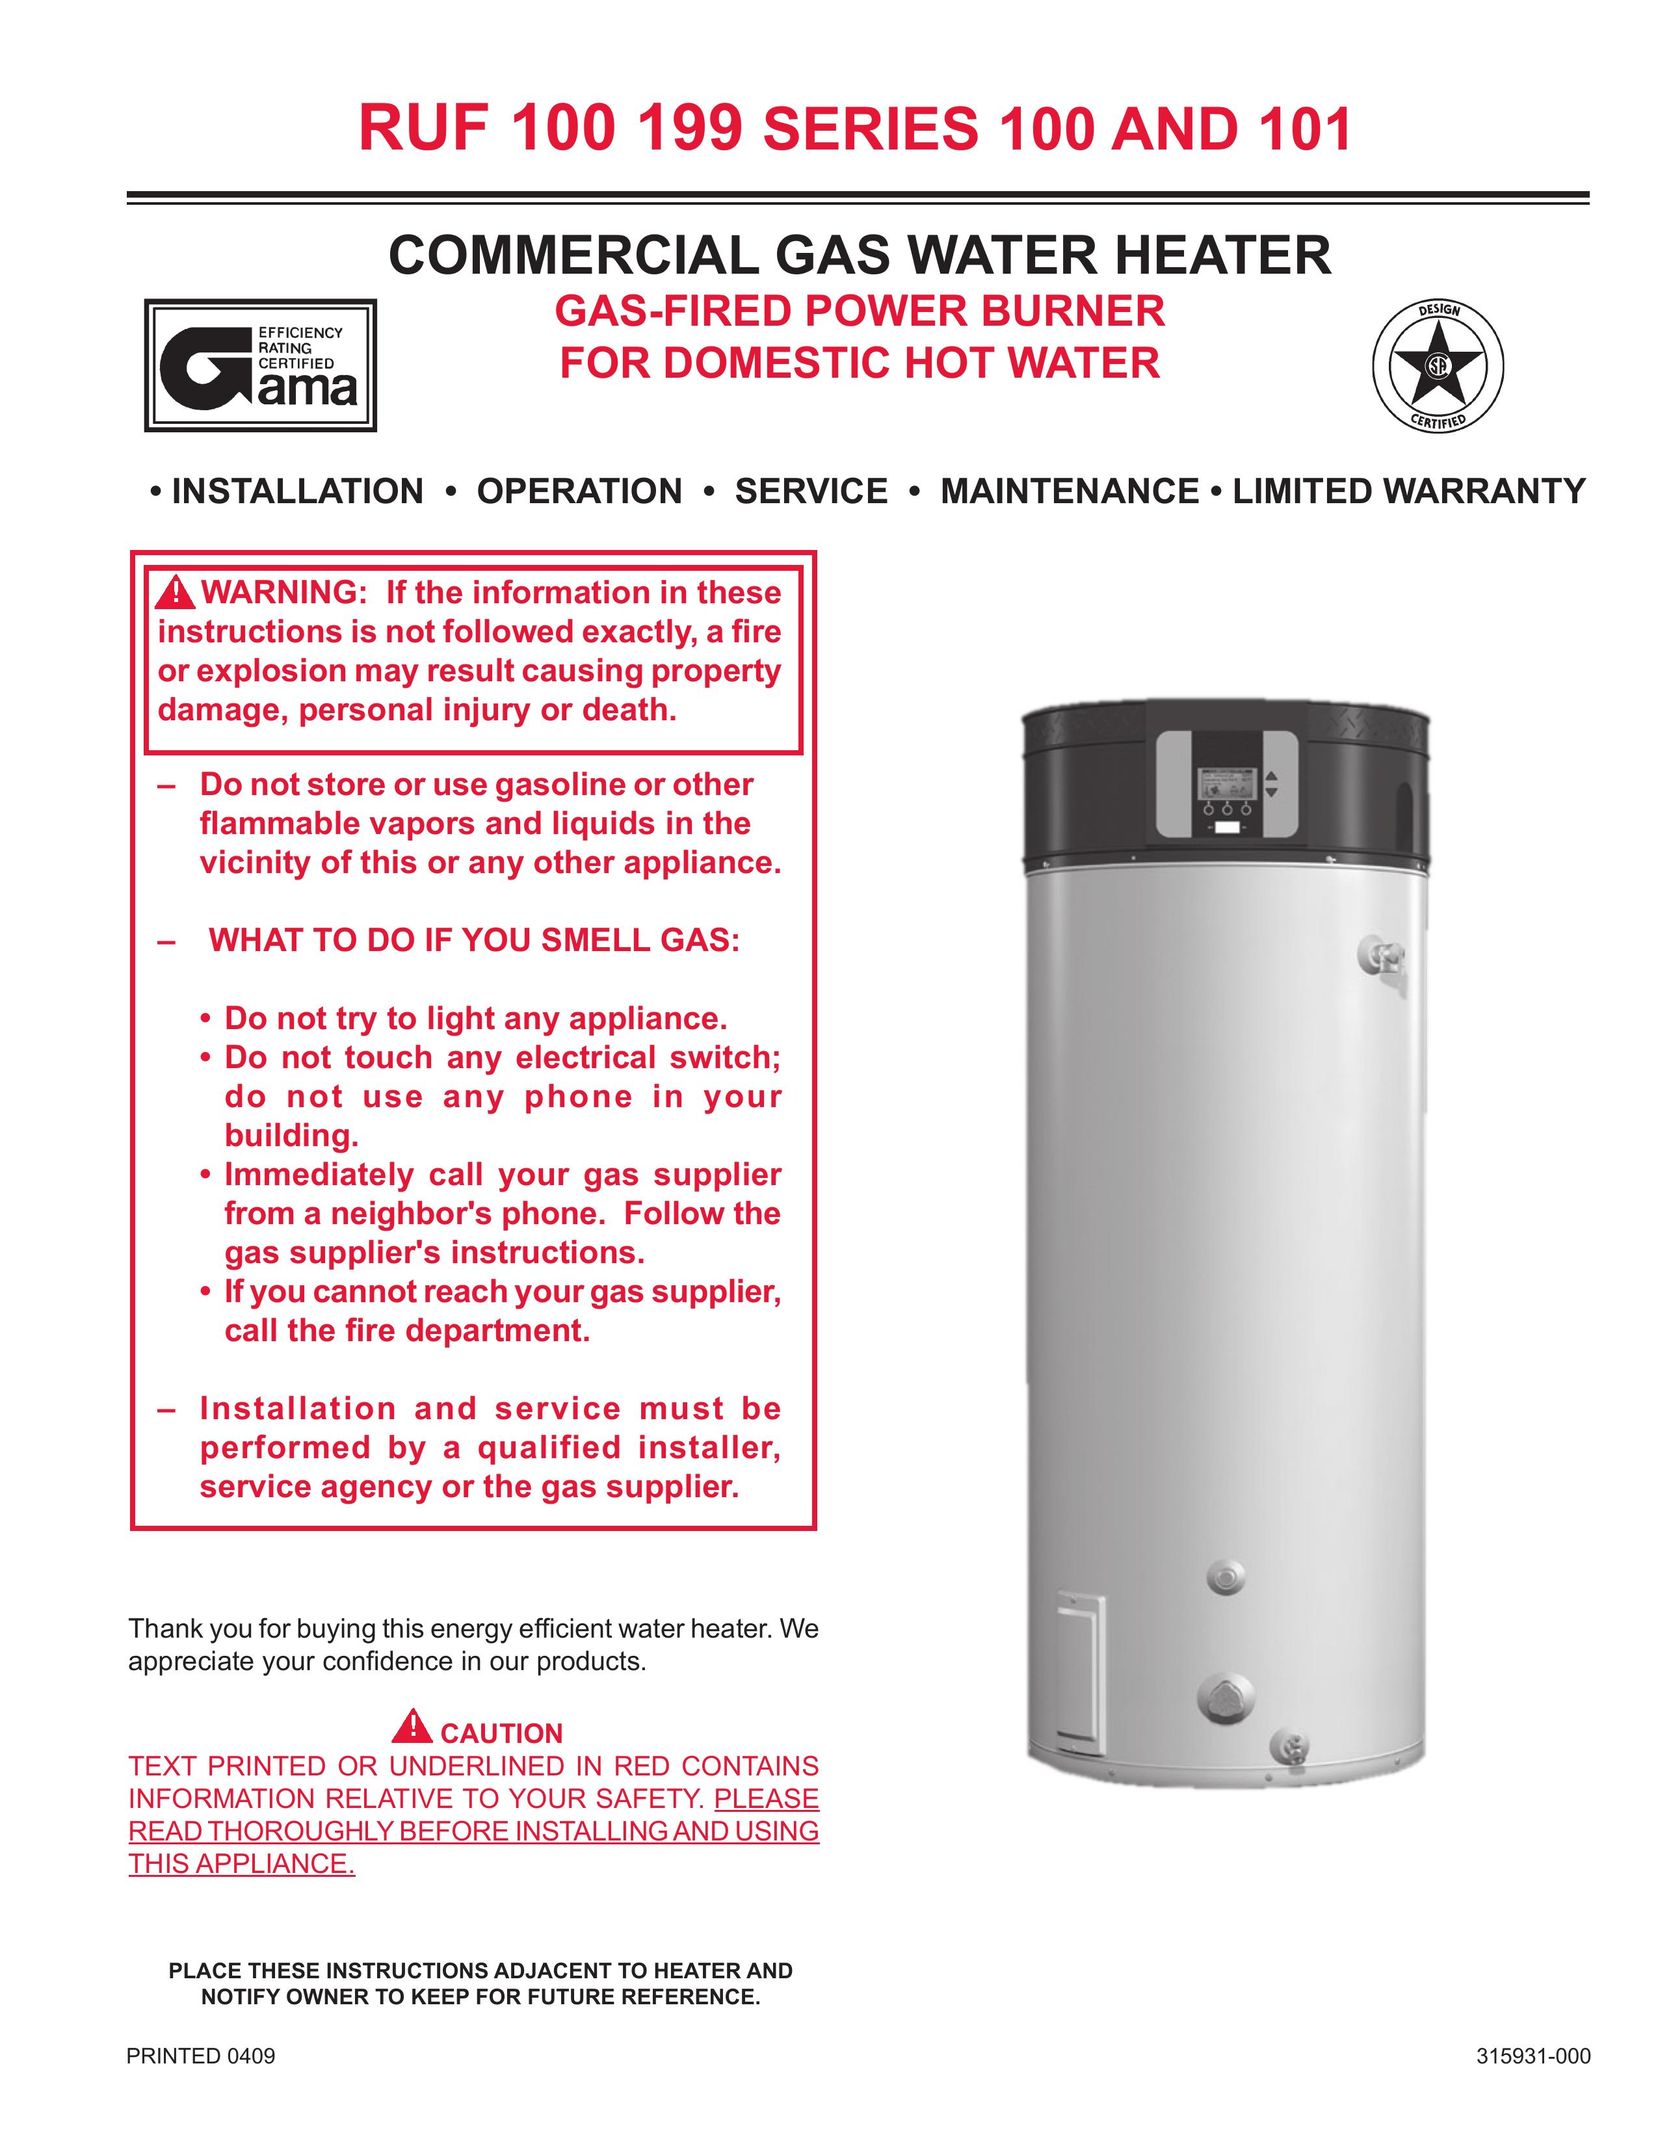 Reliance Water Heaters RUF 100 199 SERIES 101 Water Heater User Manual